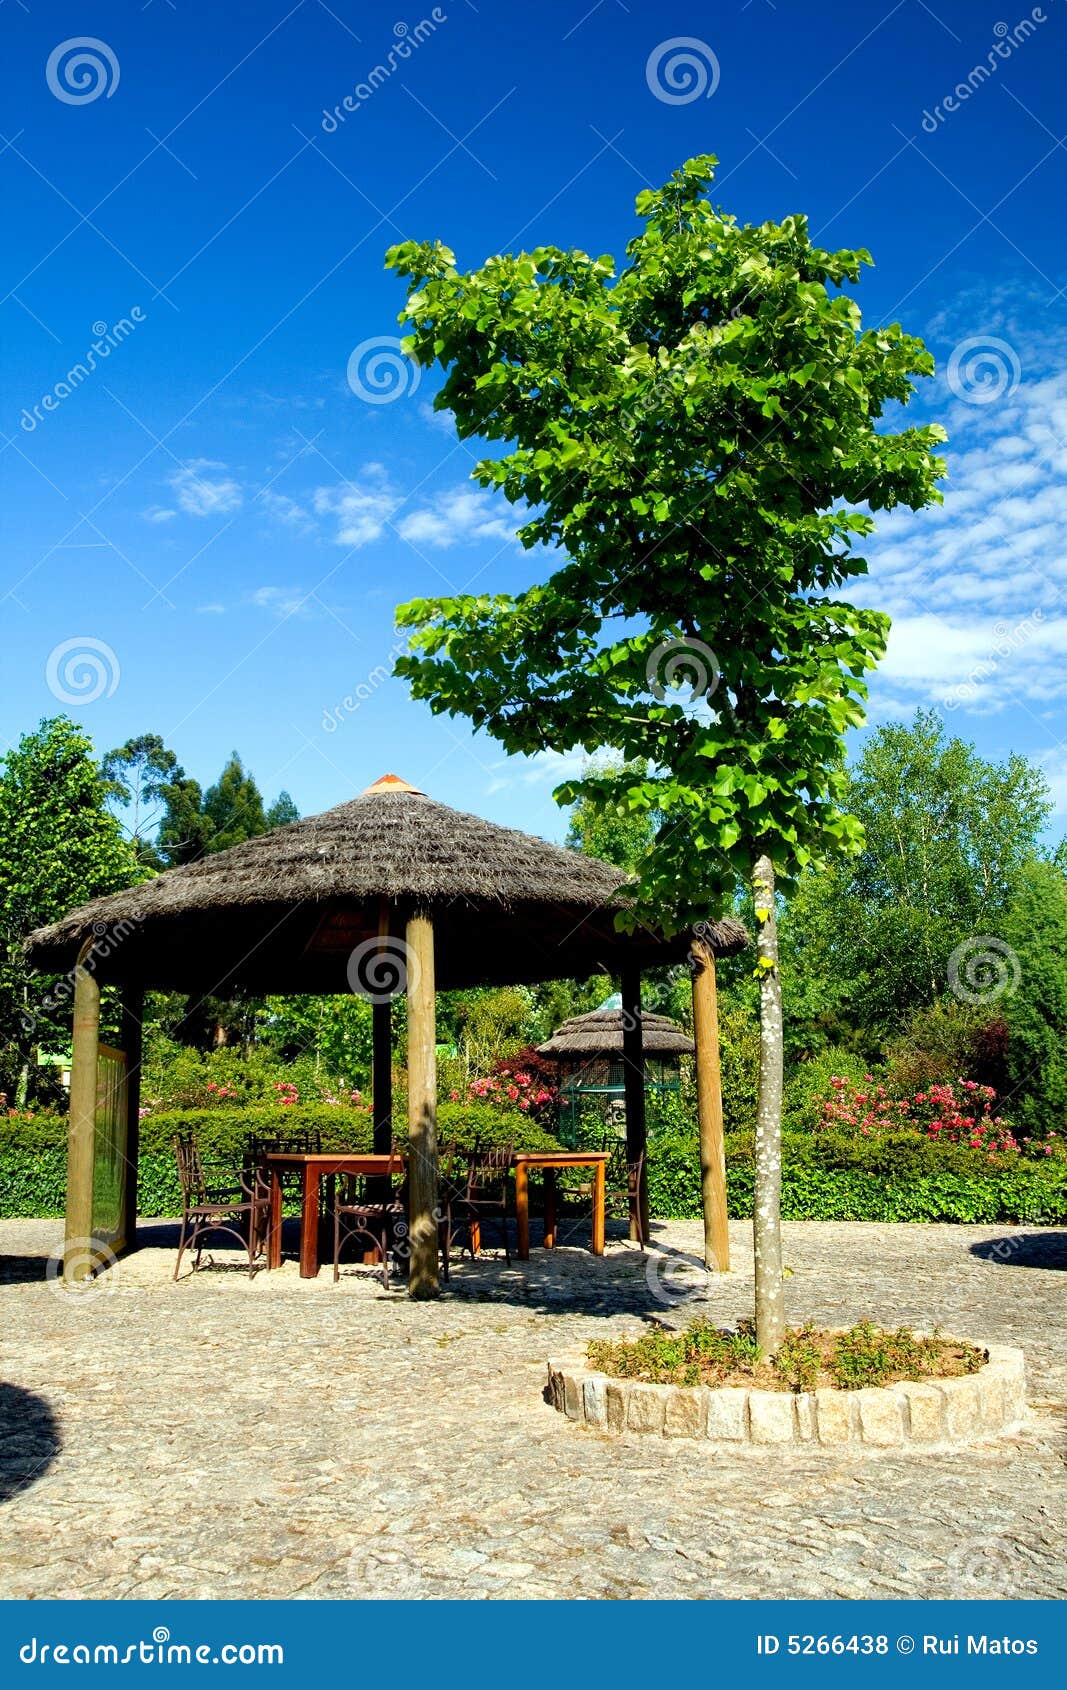 wooden sunshade on a resort garden